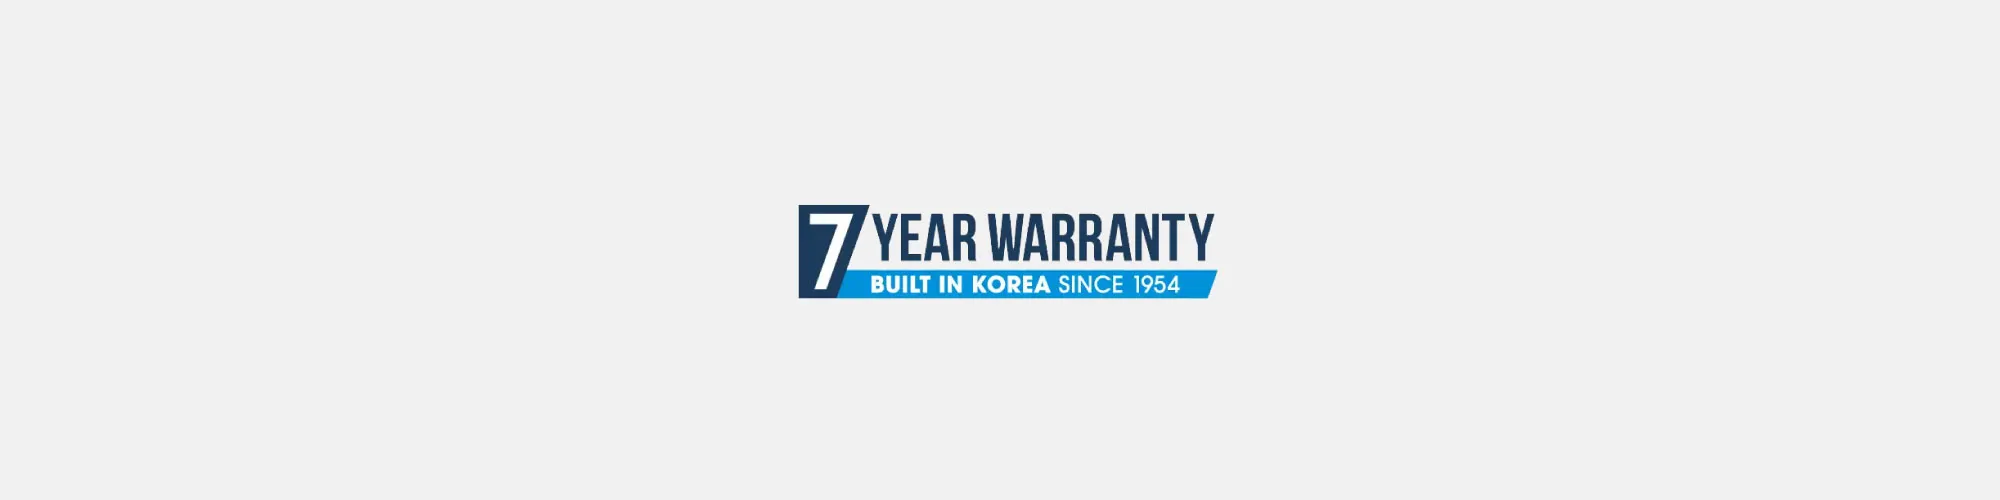 7 Year Warranty Lp